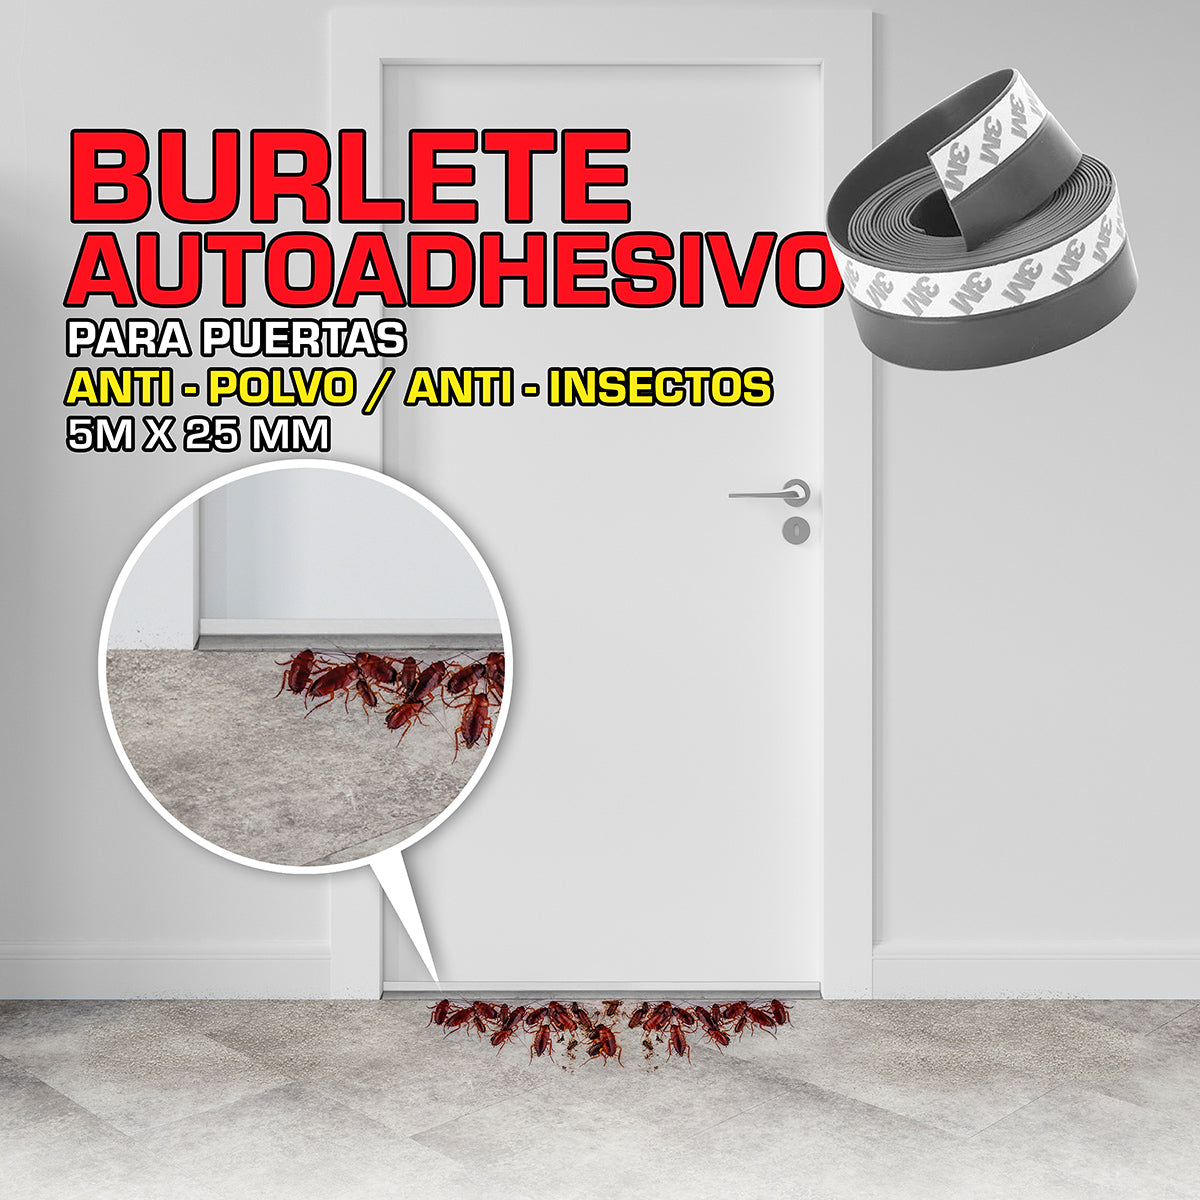 Goma Burlete Autoadhesivo Para Puertas, Antipolvo Antinsectos. 5M X 25–  Carbone Store CR